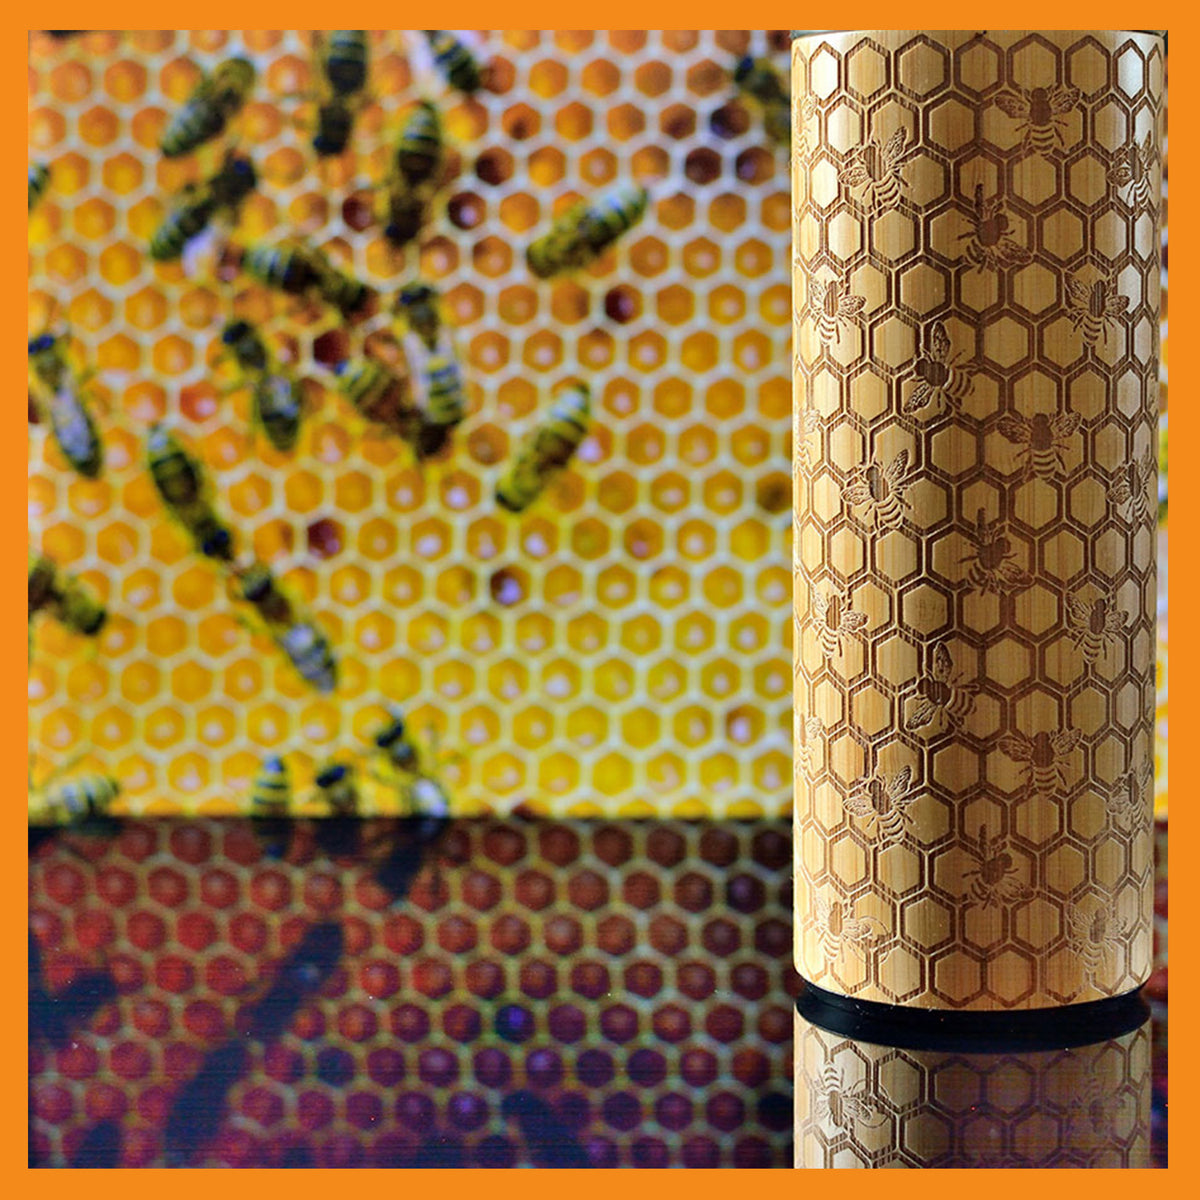 My Honey design symbolism of bees and honey